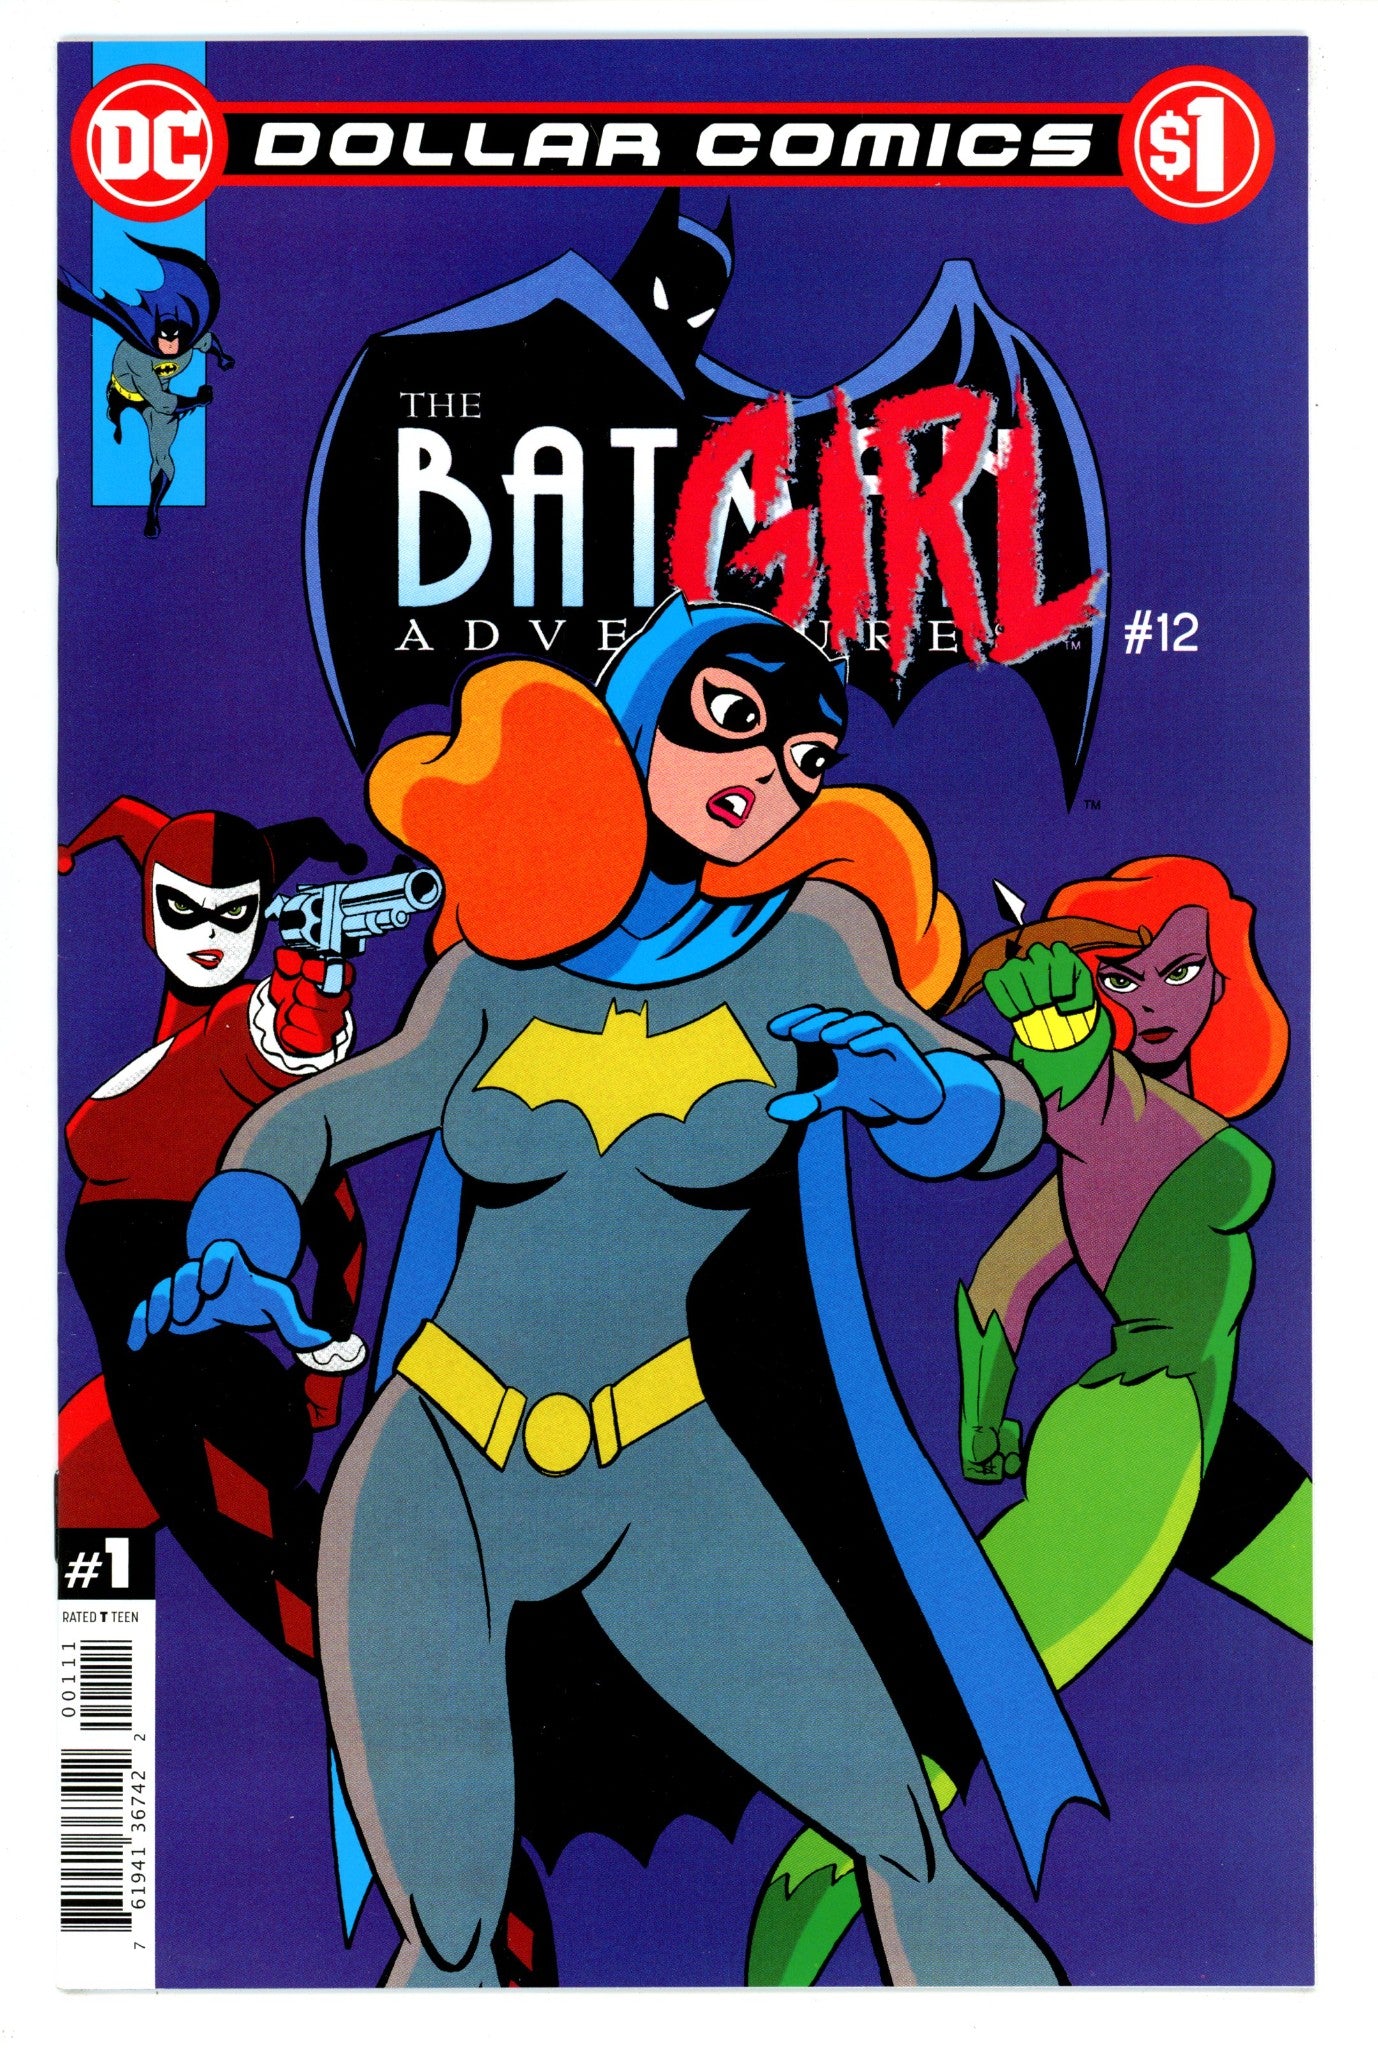 Dollar Comics: The Batman Adventures 12 [nn] NM- (9.2) (2020) 